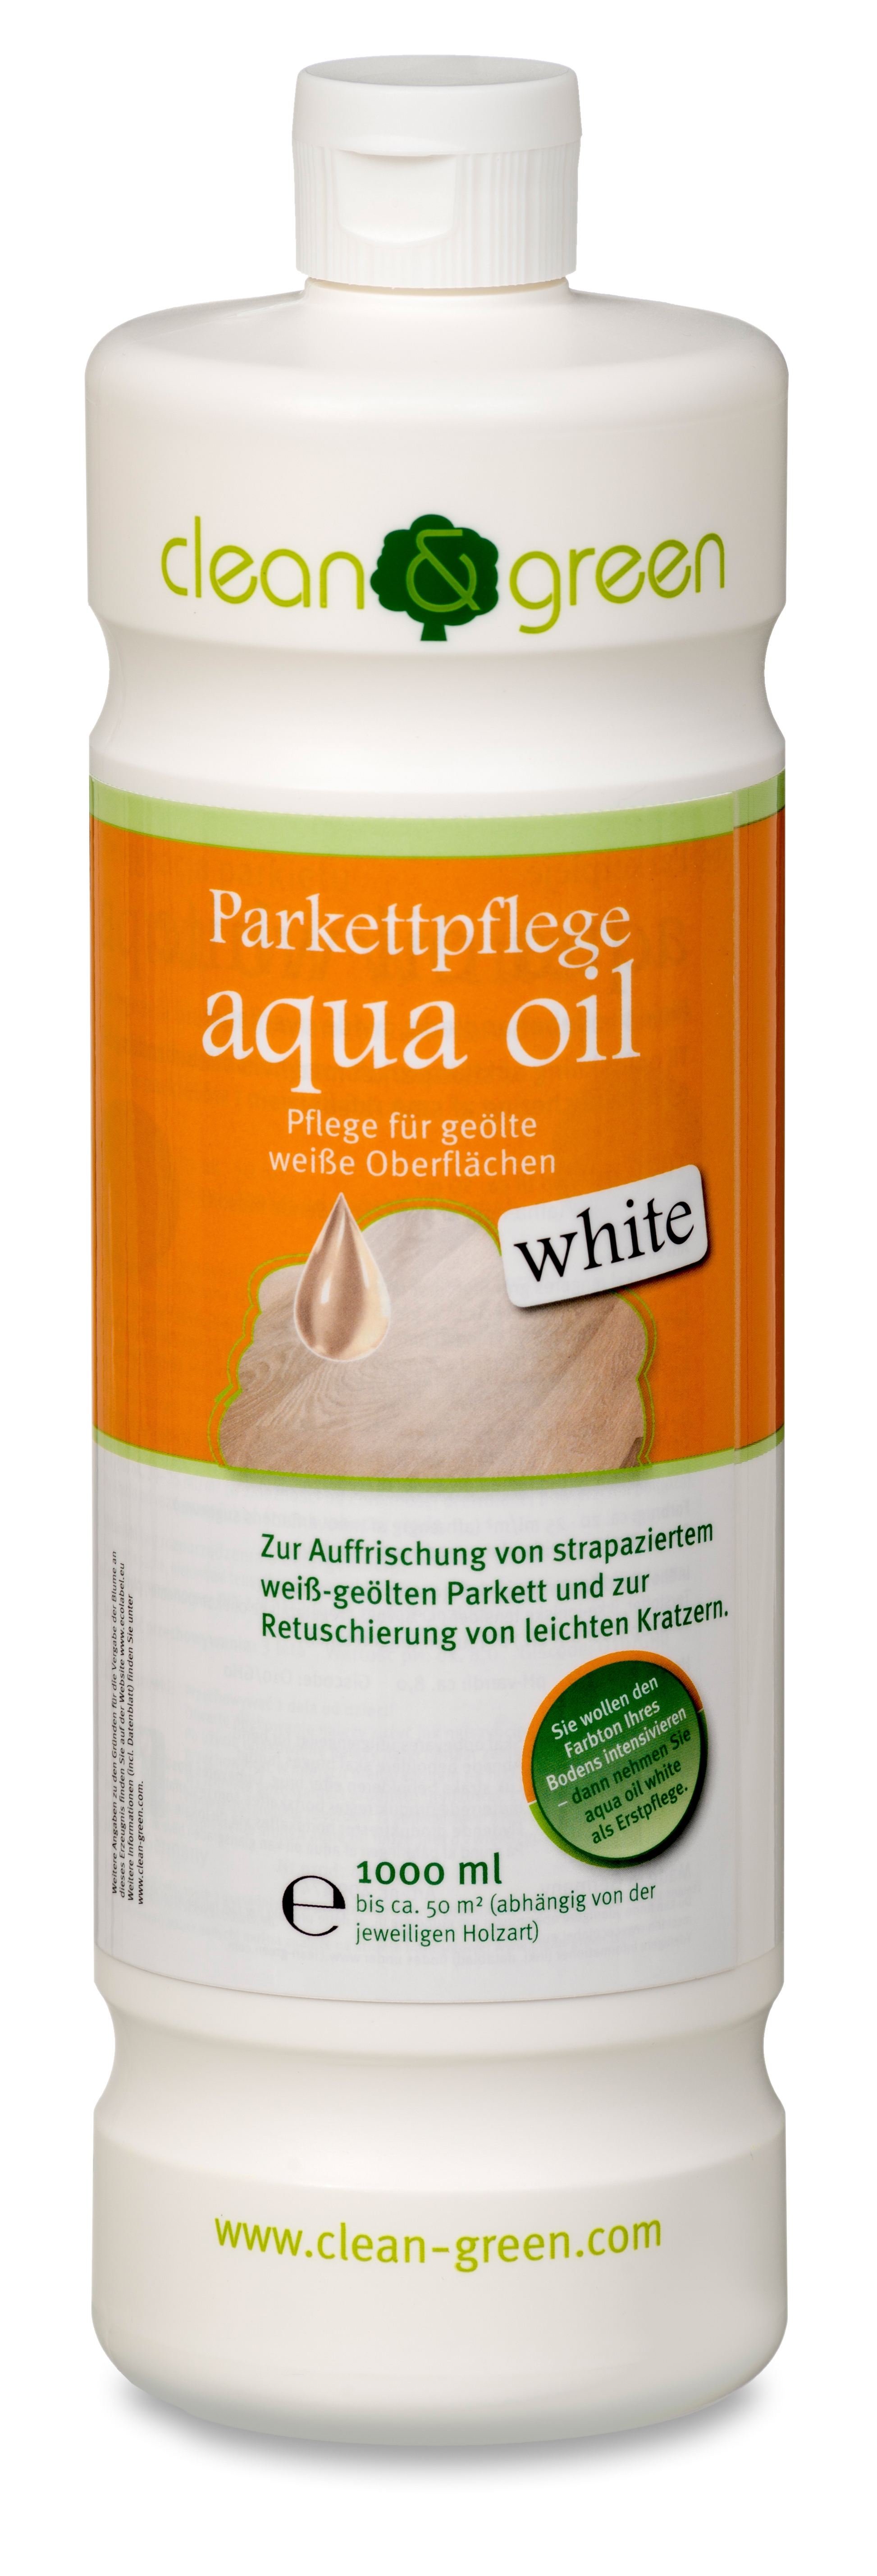 Haro clean & green Parkettpflege aqua oil white